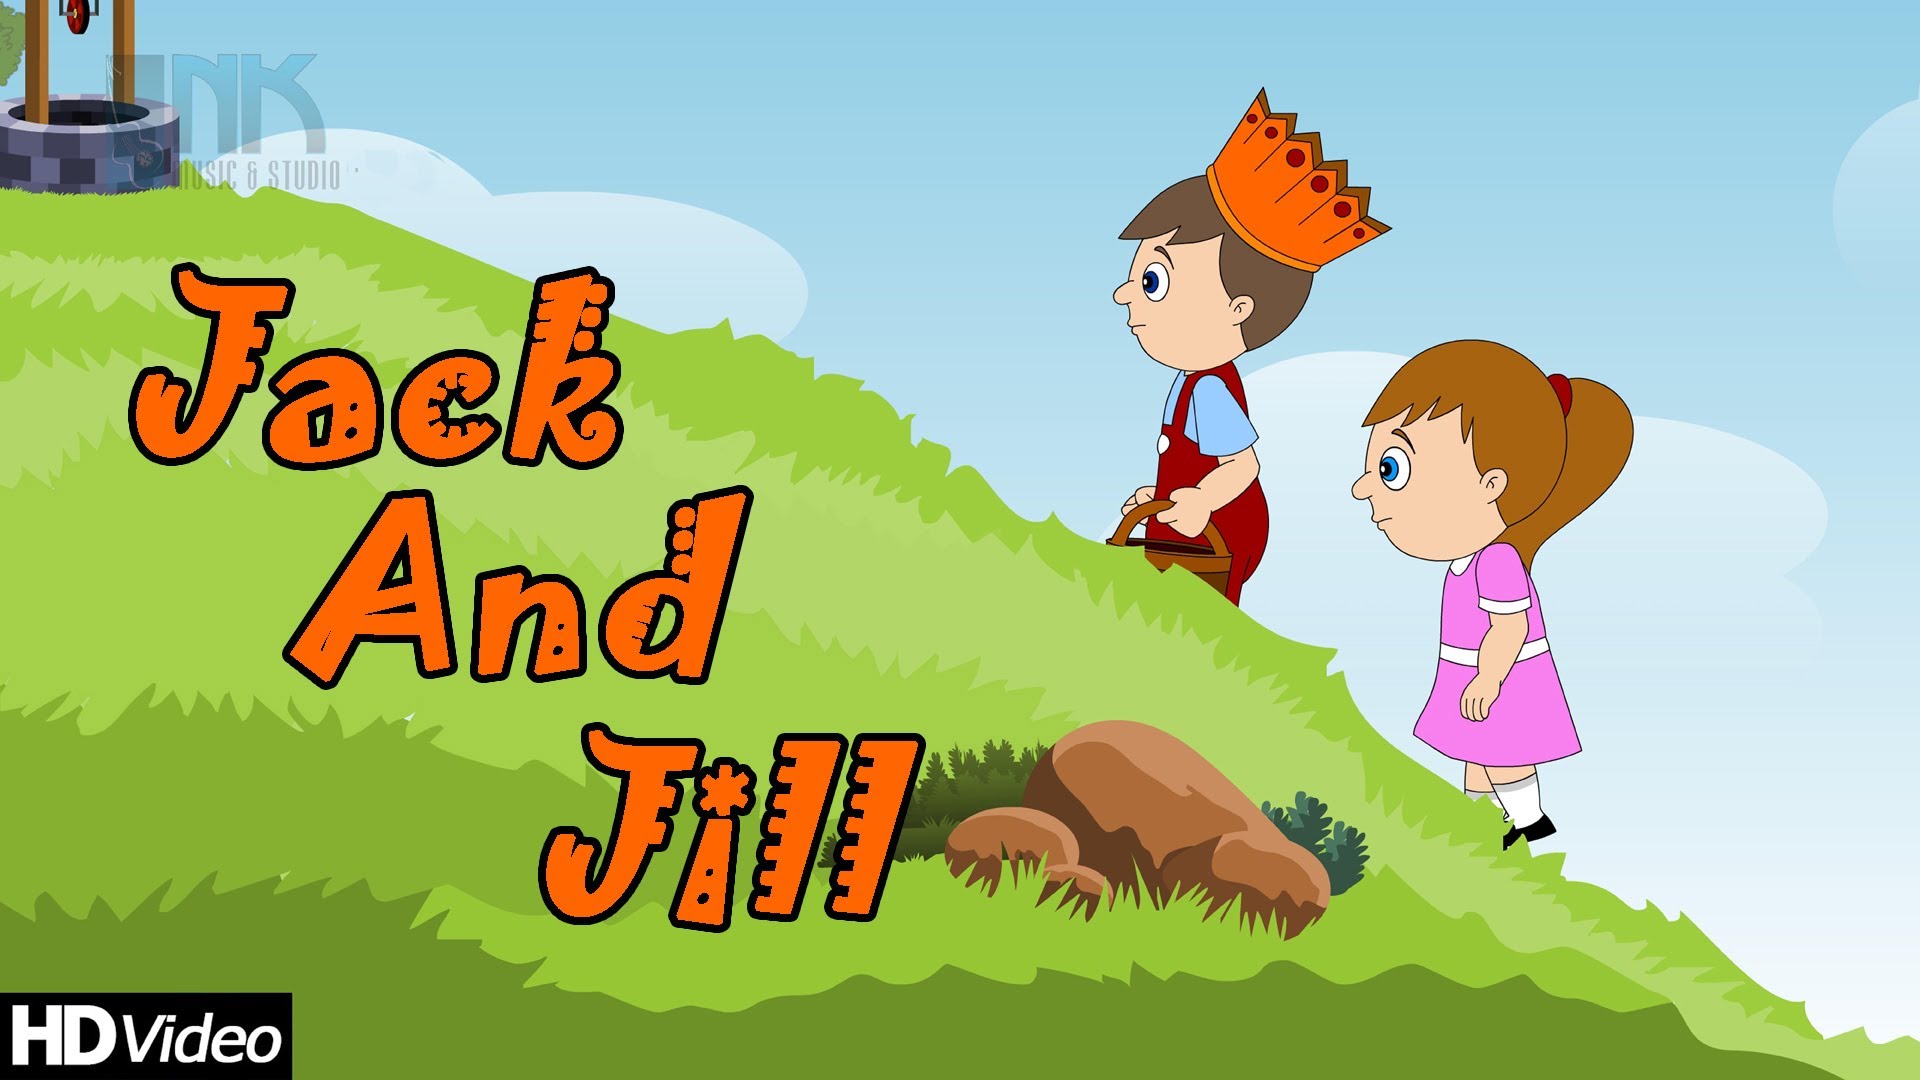 Jack_and_jill